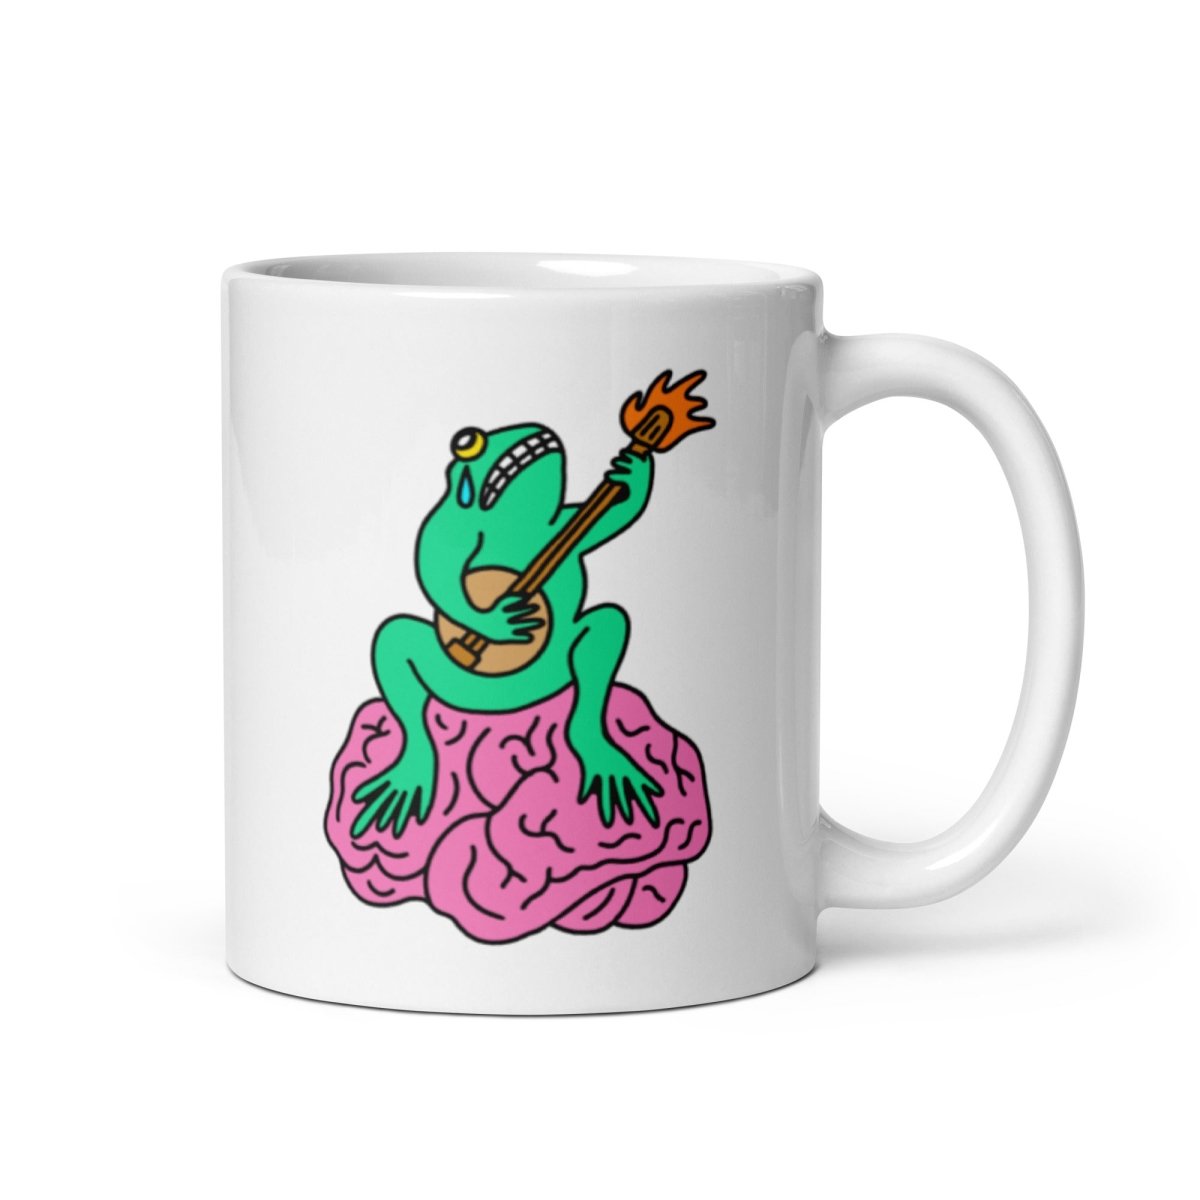 Brain frog mug - Mug - Pretty Bad Co.